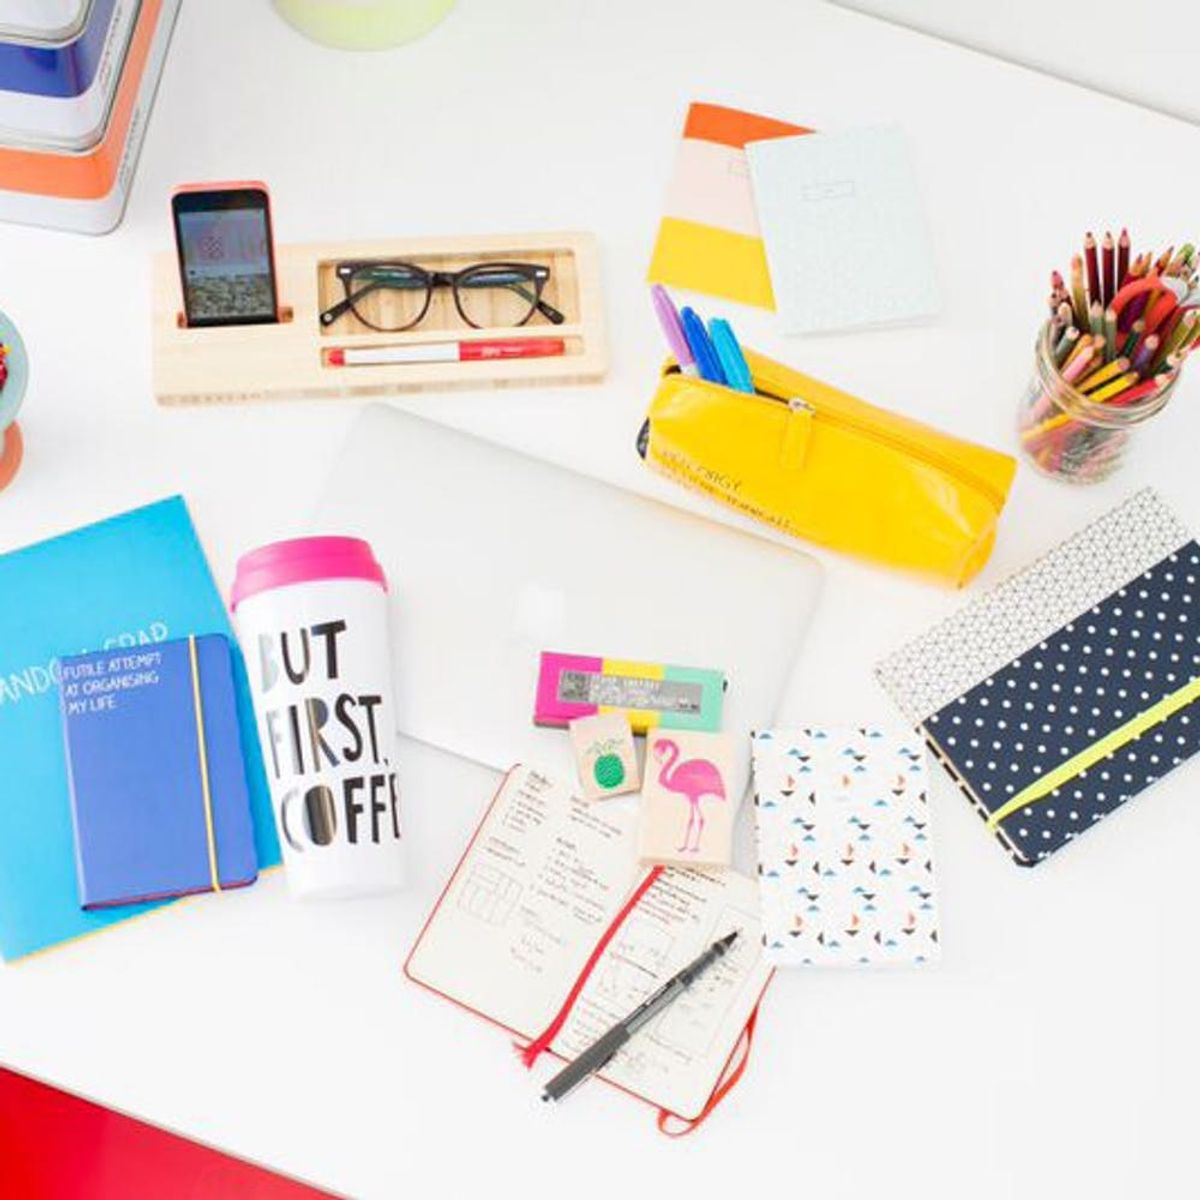 Good News: A Messy Desk Makes You More Creative